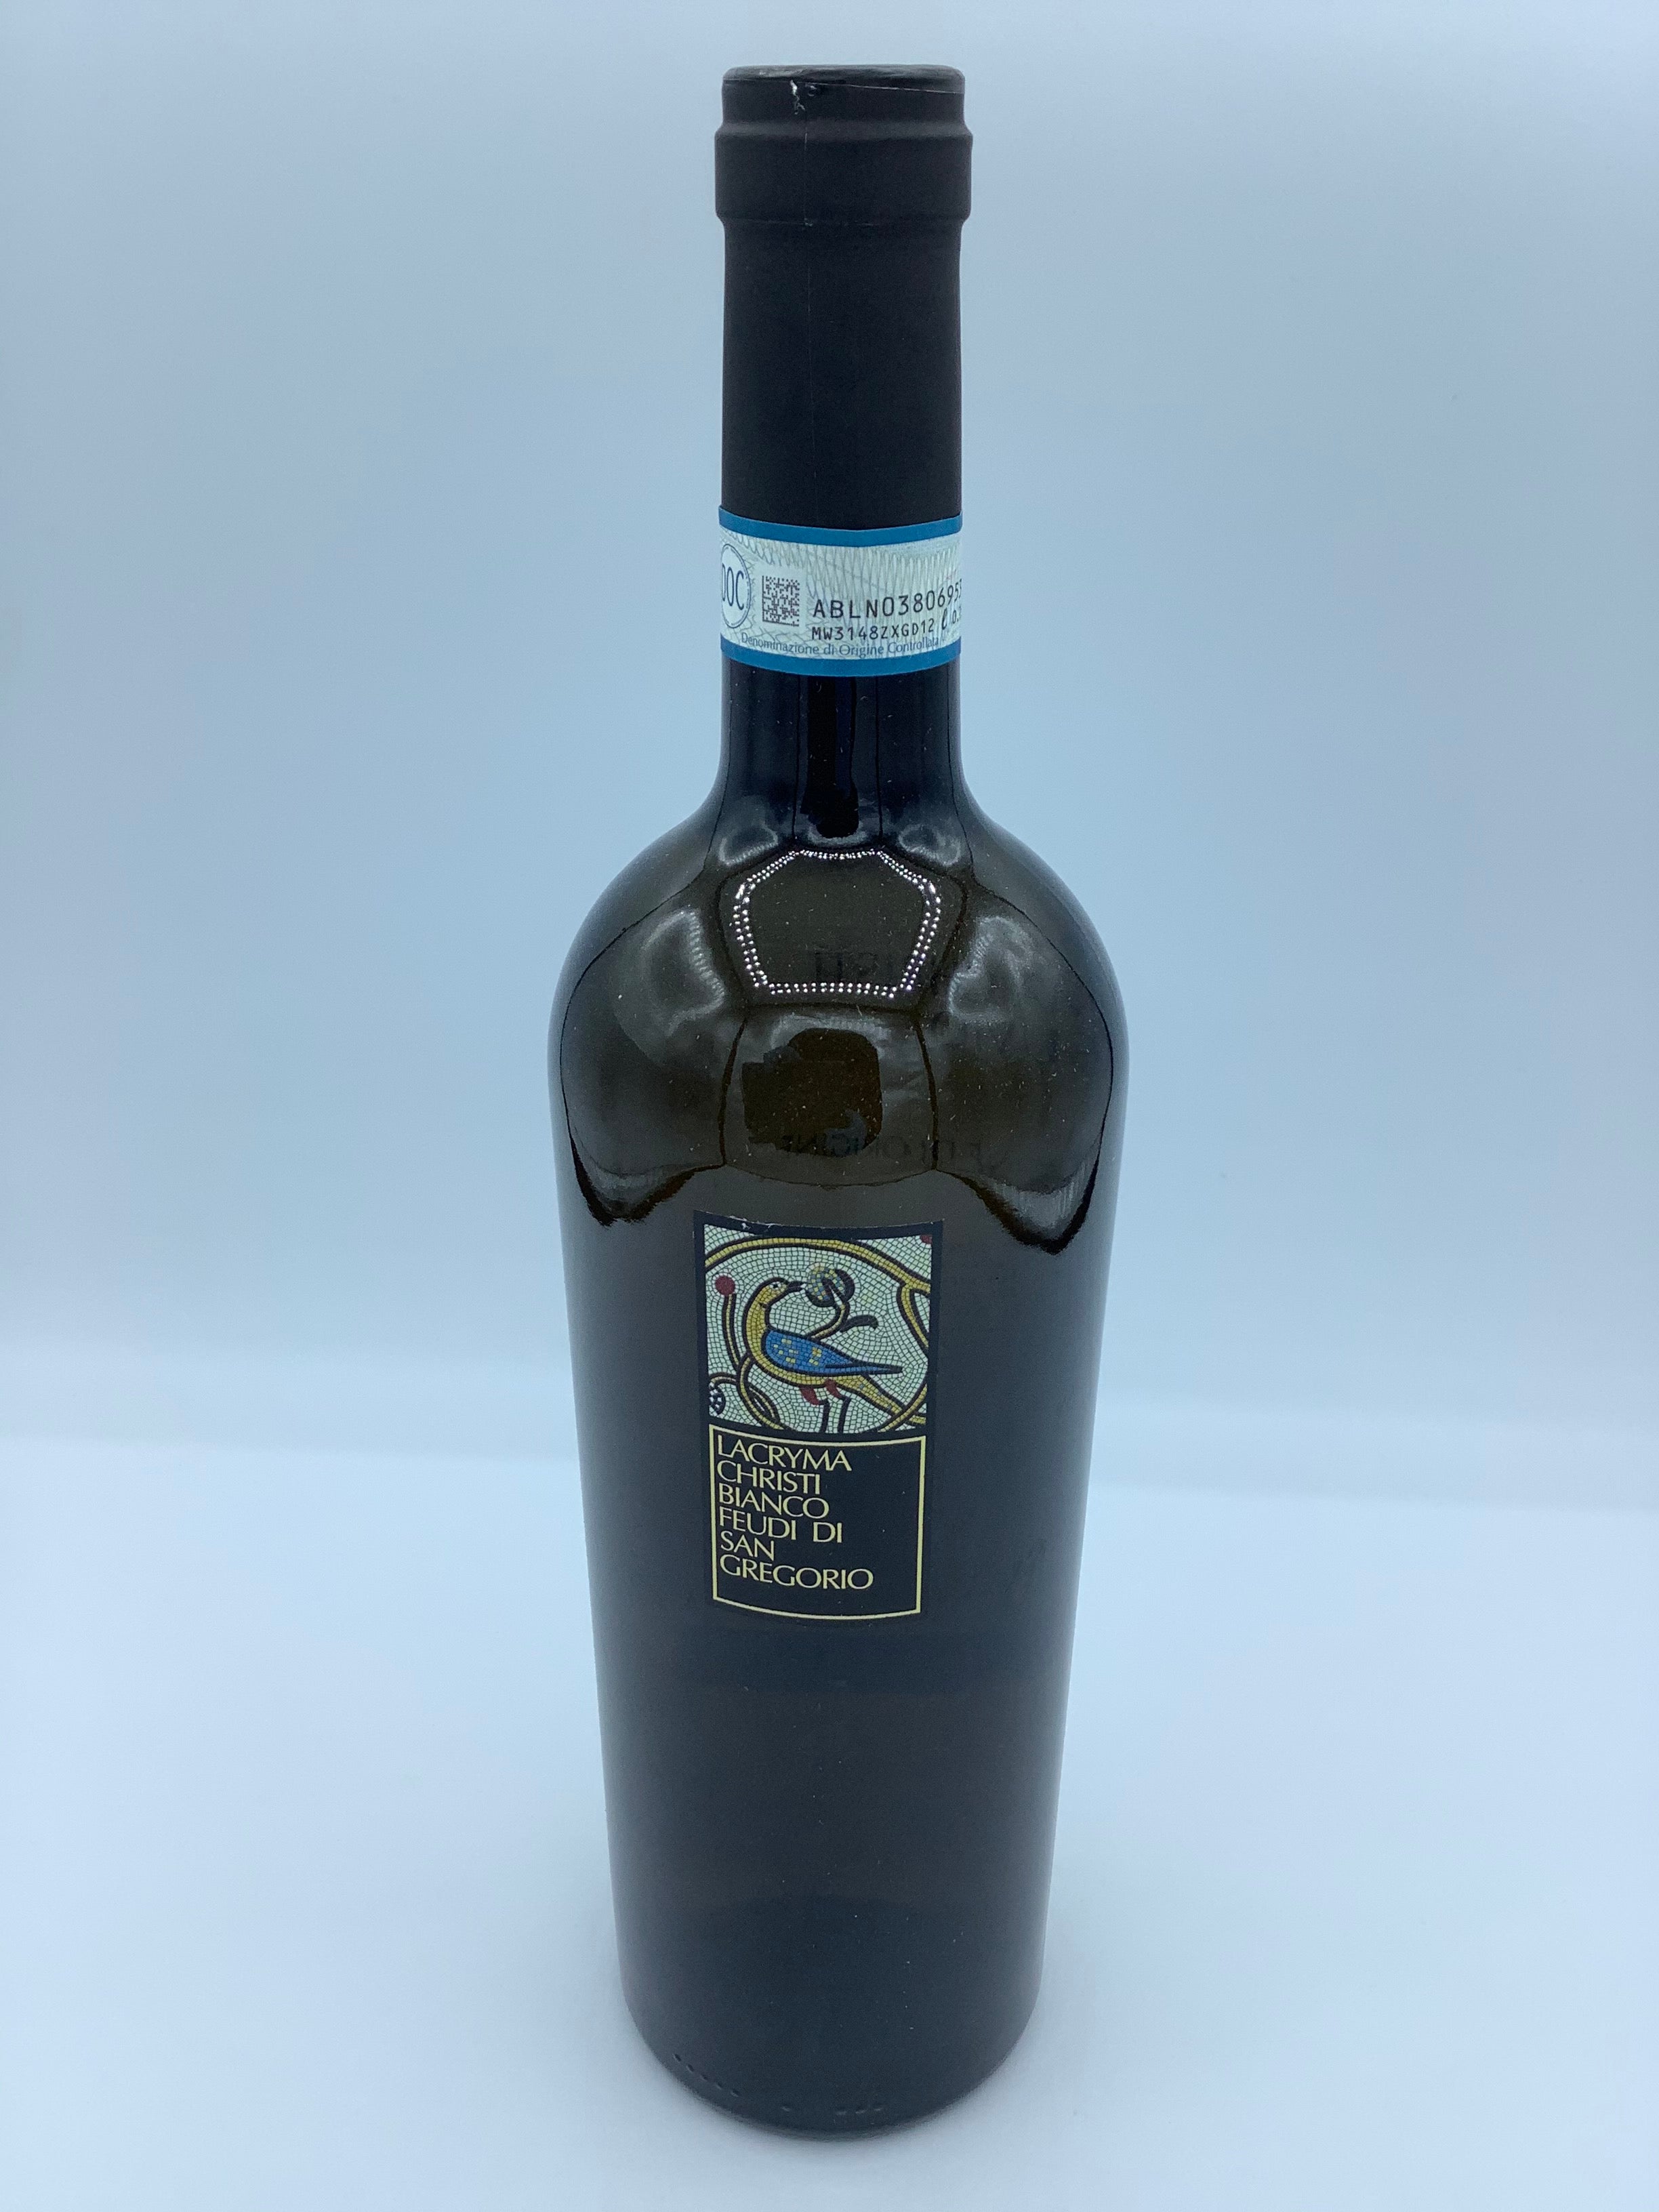 Vin Blanc LACRYMA CHRISTI Feudi di San Gregorio 0.75L